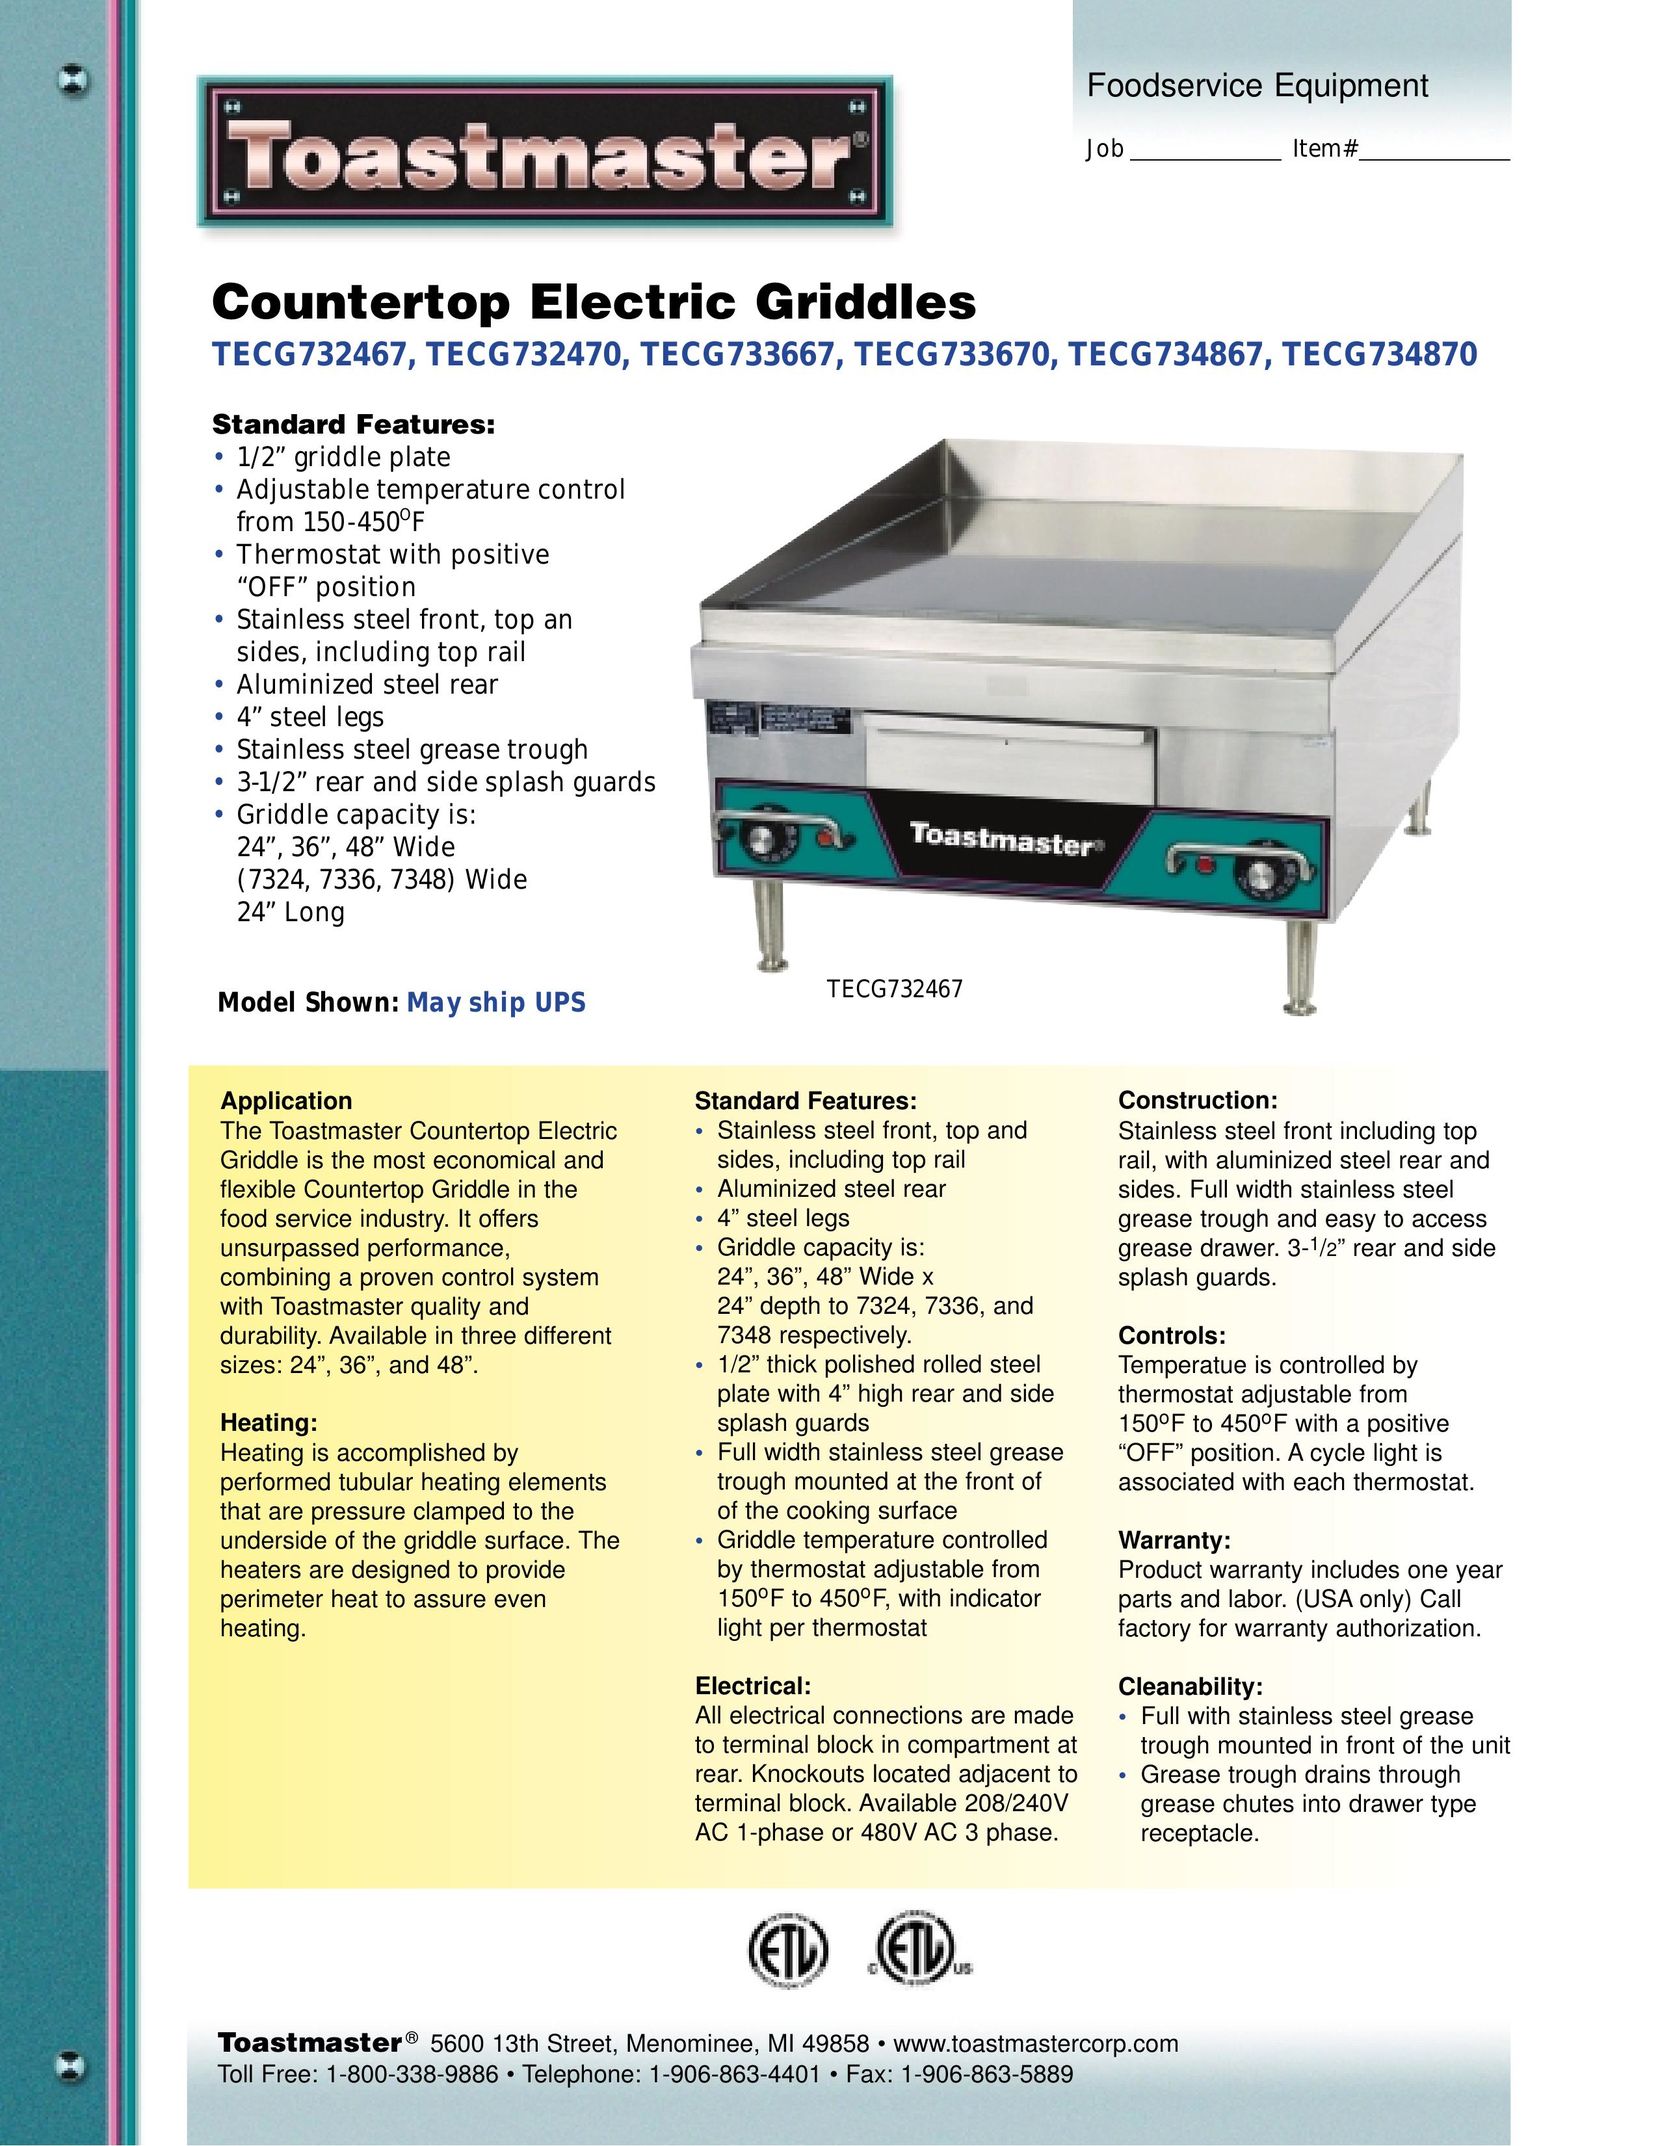 Toastmaster TECG734867 Griddle User Manual